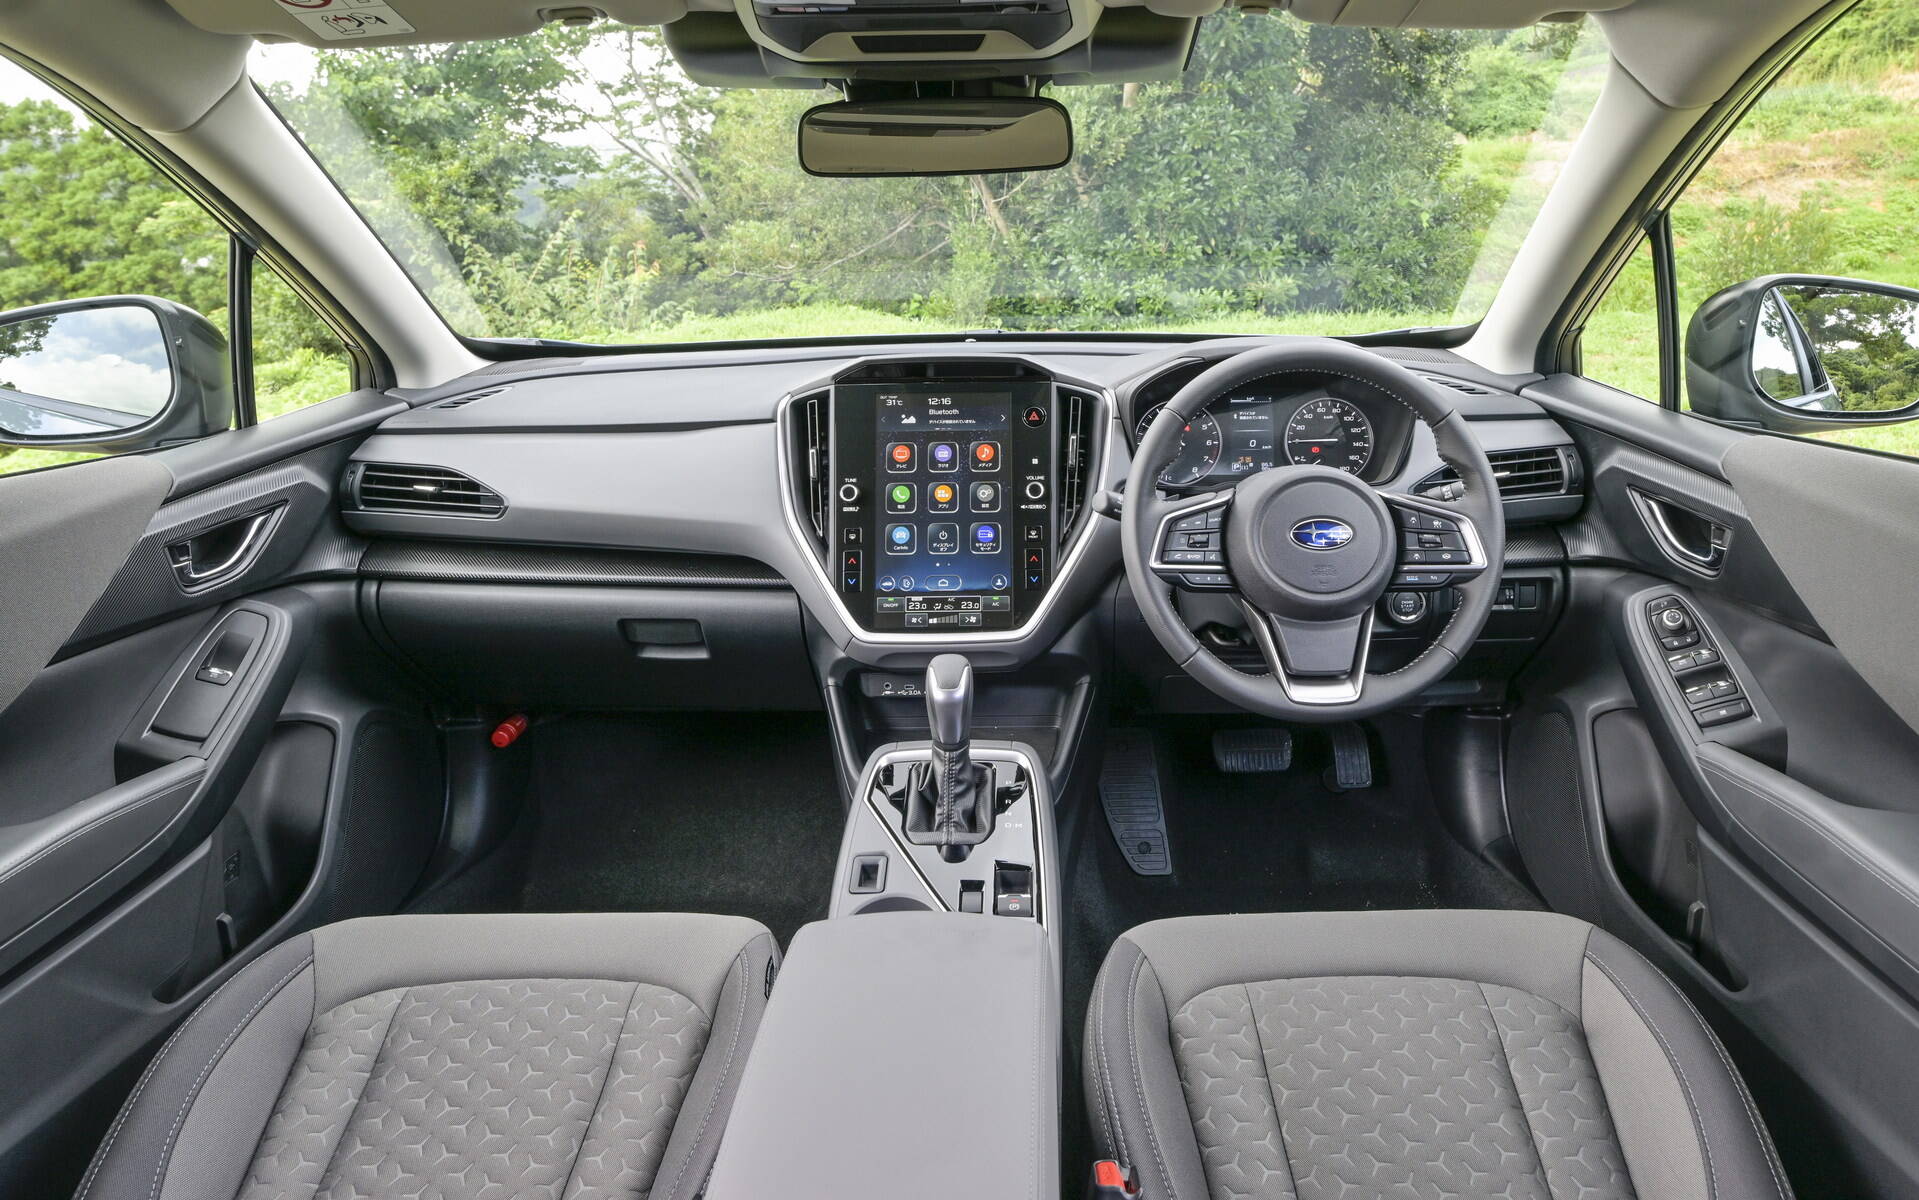 2024 Subaru Crosstrek A First Look at the Next Generation TRACEDNEWS